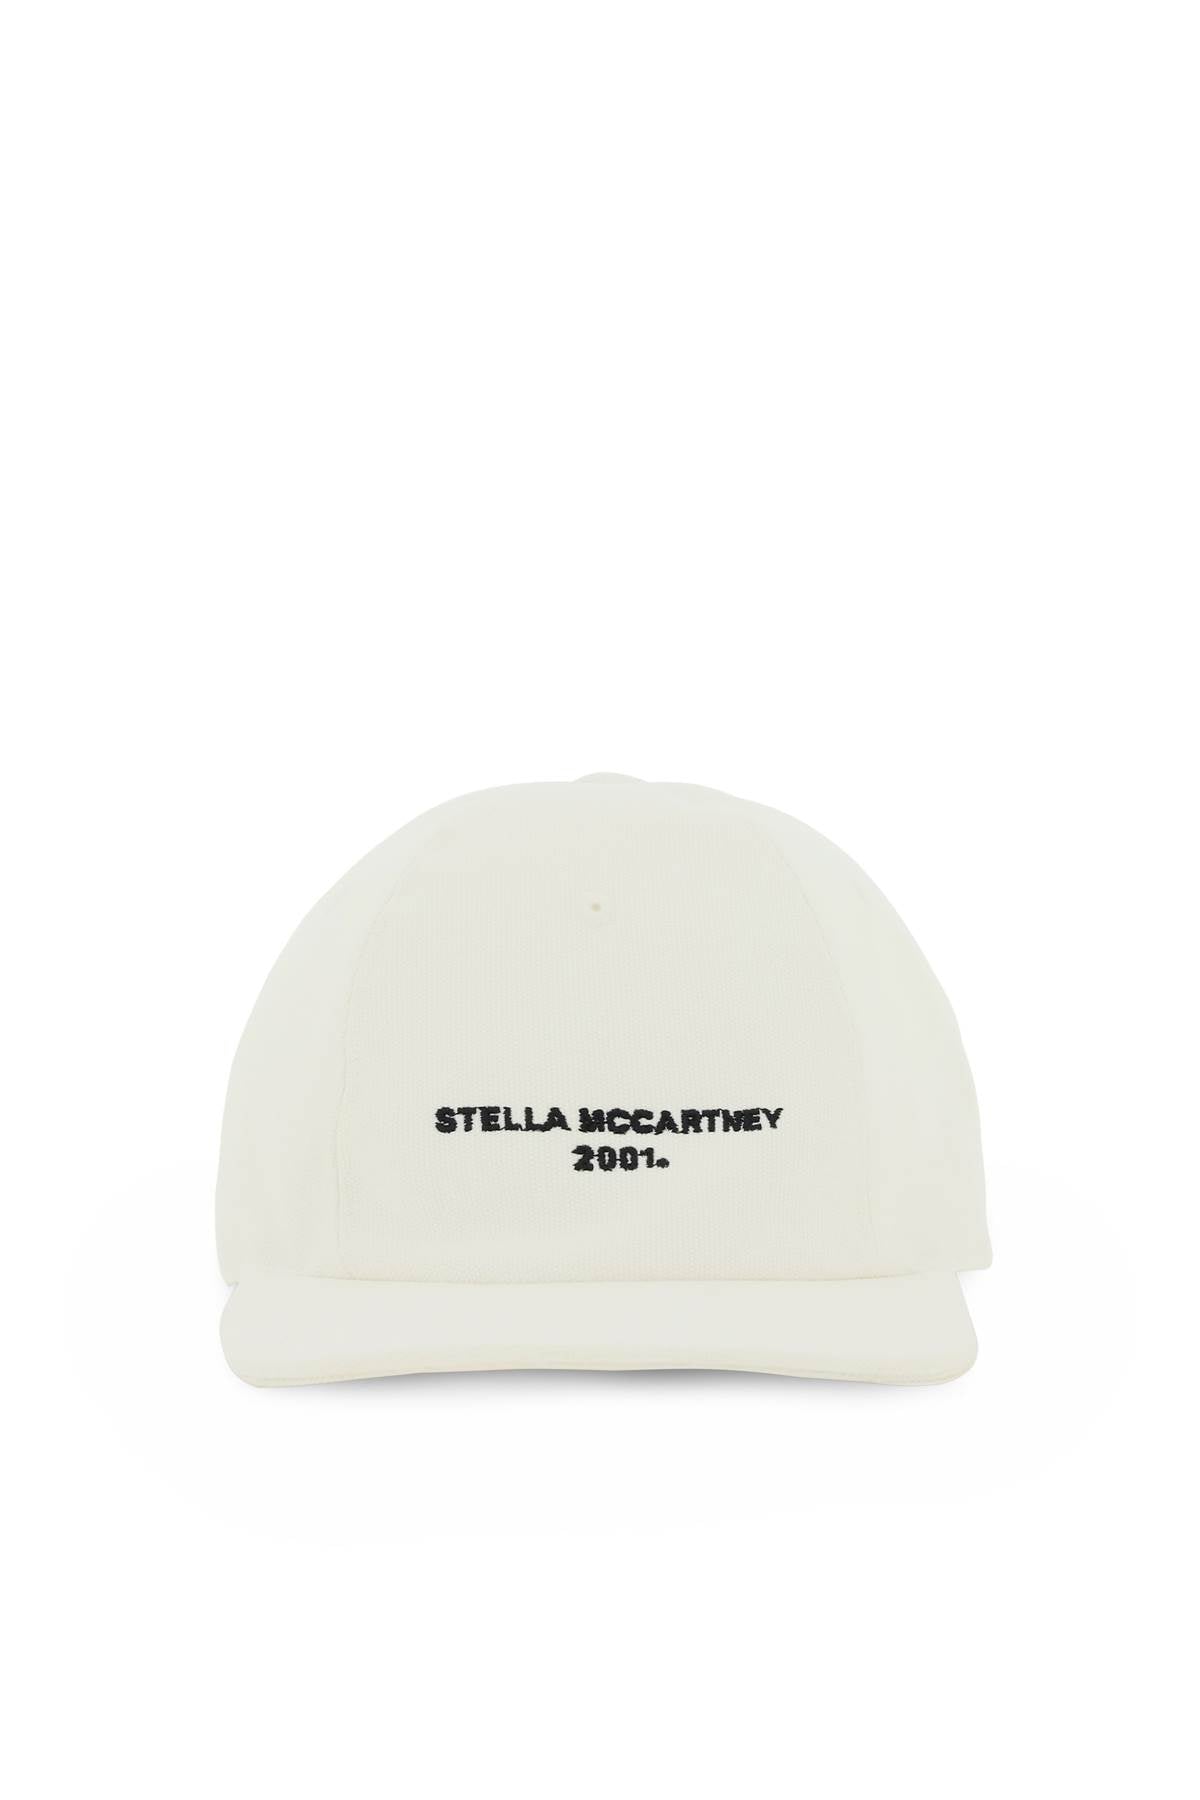 Stella Mccartney Logo Baseball Cap-Stella McCartney-Urbanheer